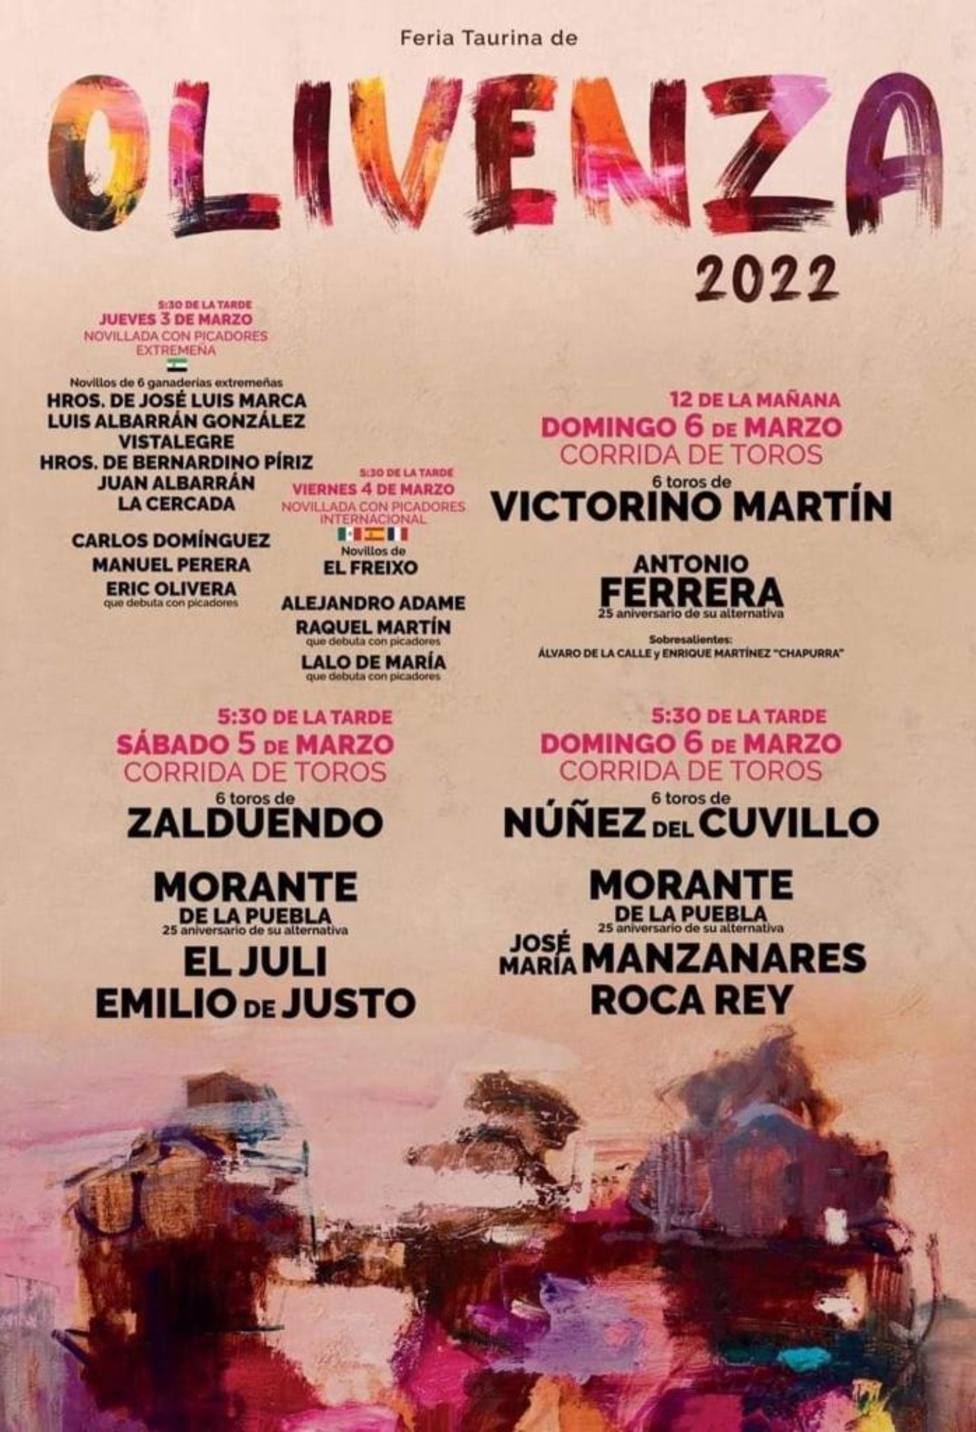 Feria Taurina de Olivenza 2022